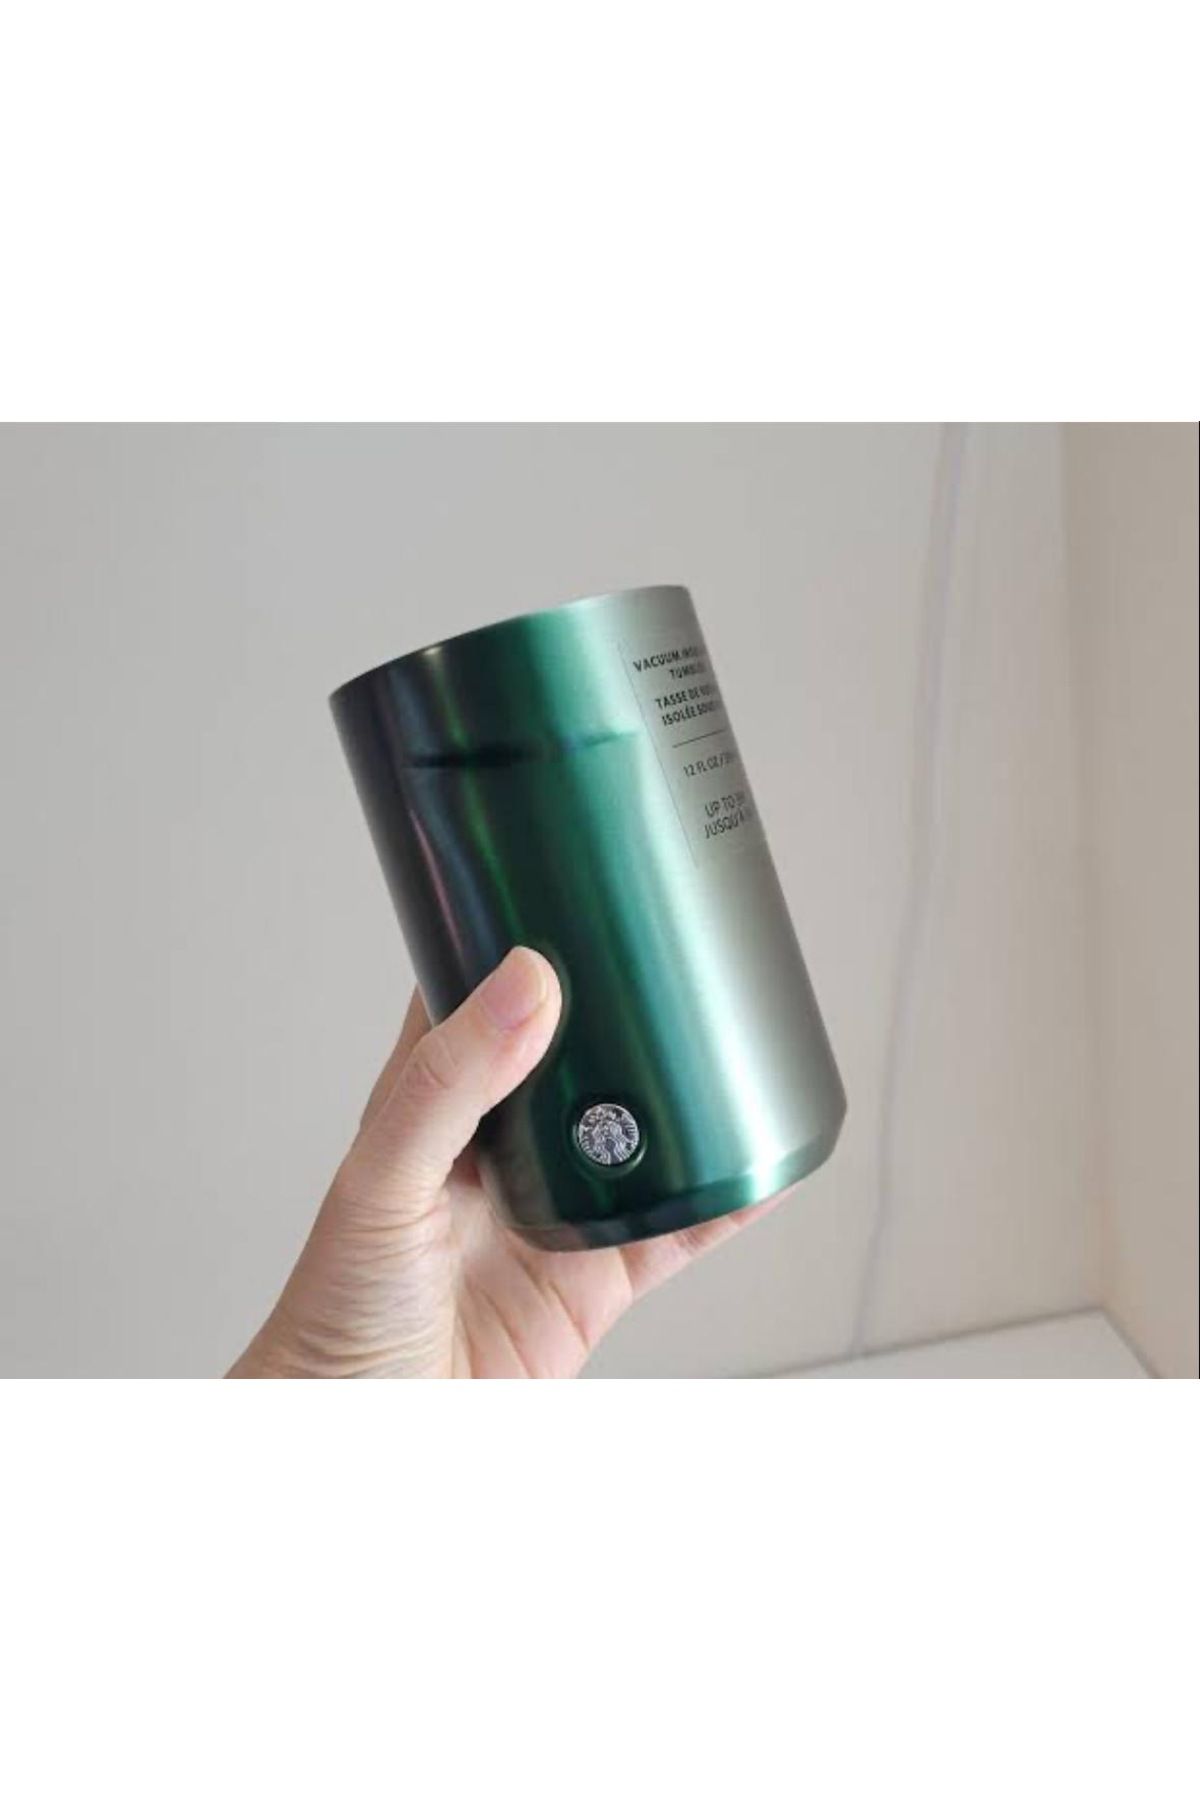 Starbucks ®Green/Silver Vacuum Insulated Stainless Steel Tumbler 12 oz 355 Ml